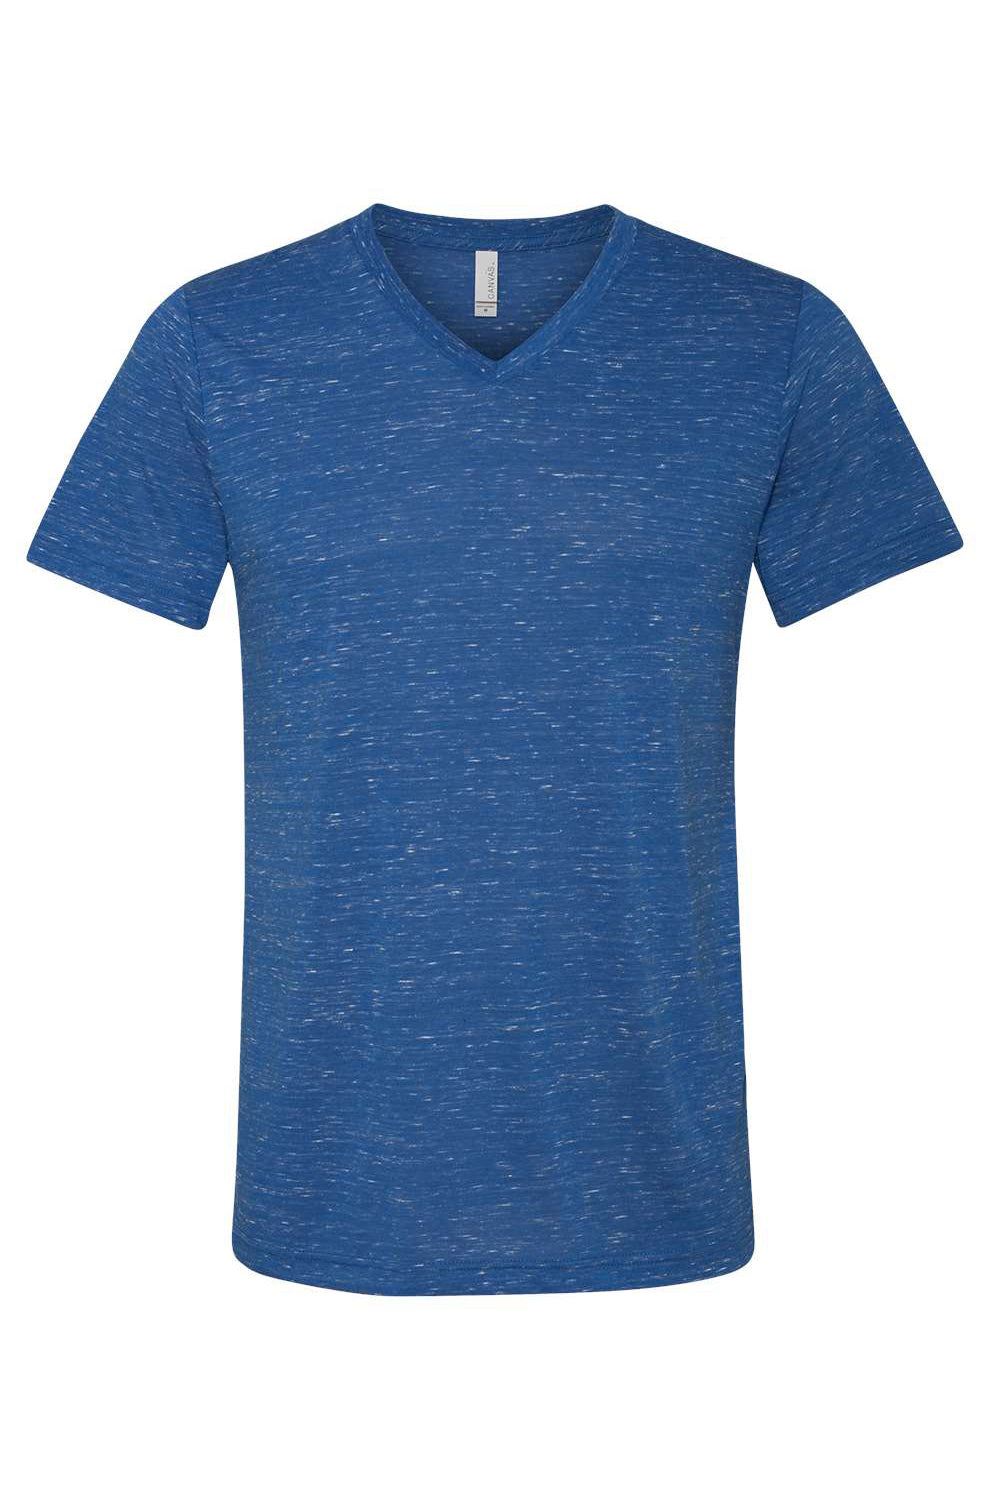 Bella + Canvas BC3005/3005/3655C Mens Jersey Short Sleeve V-Neck T-Shirt True Royal Blue Marble Flat Front